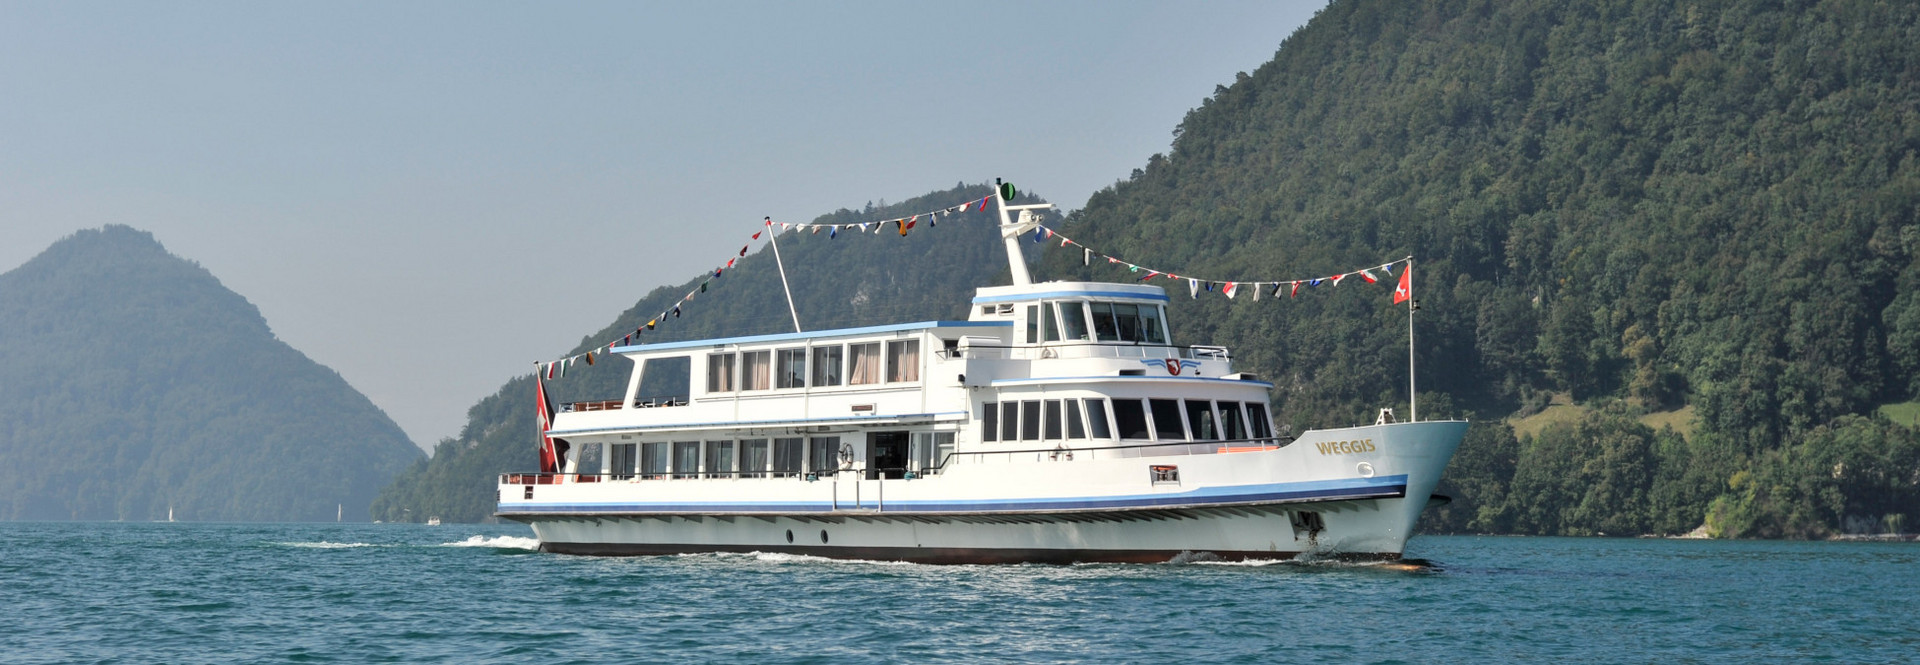 The motor vessel Weggis cruises on Lake Lucerne in sunny weather.